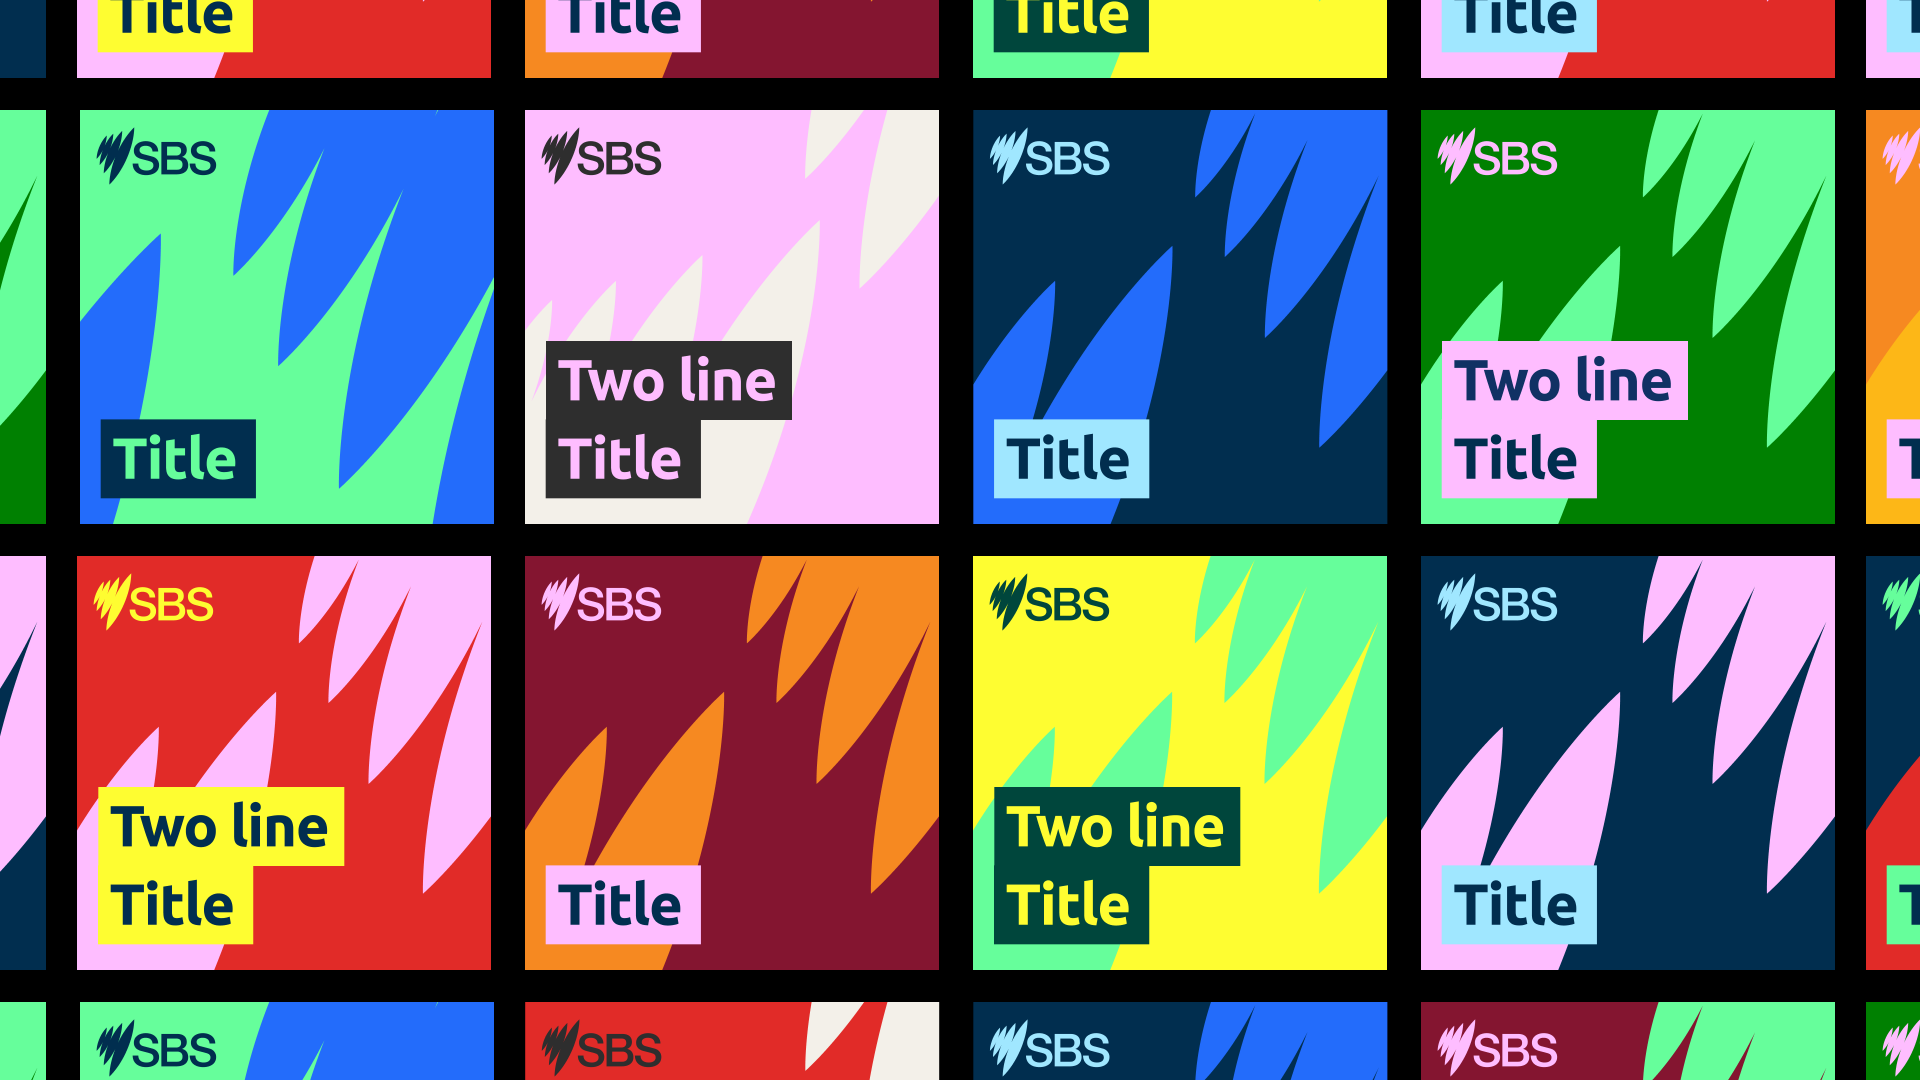 SBS Podcast tile designs showcasing the bright colour palette